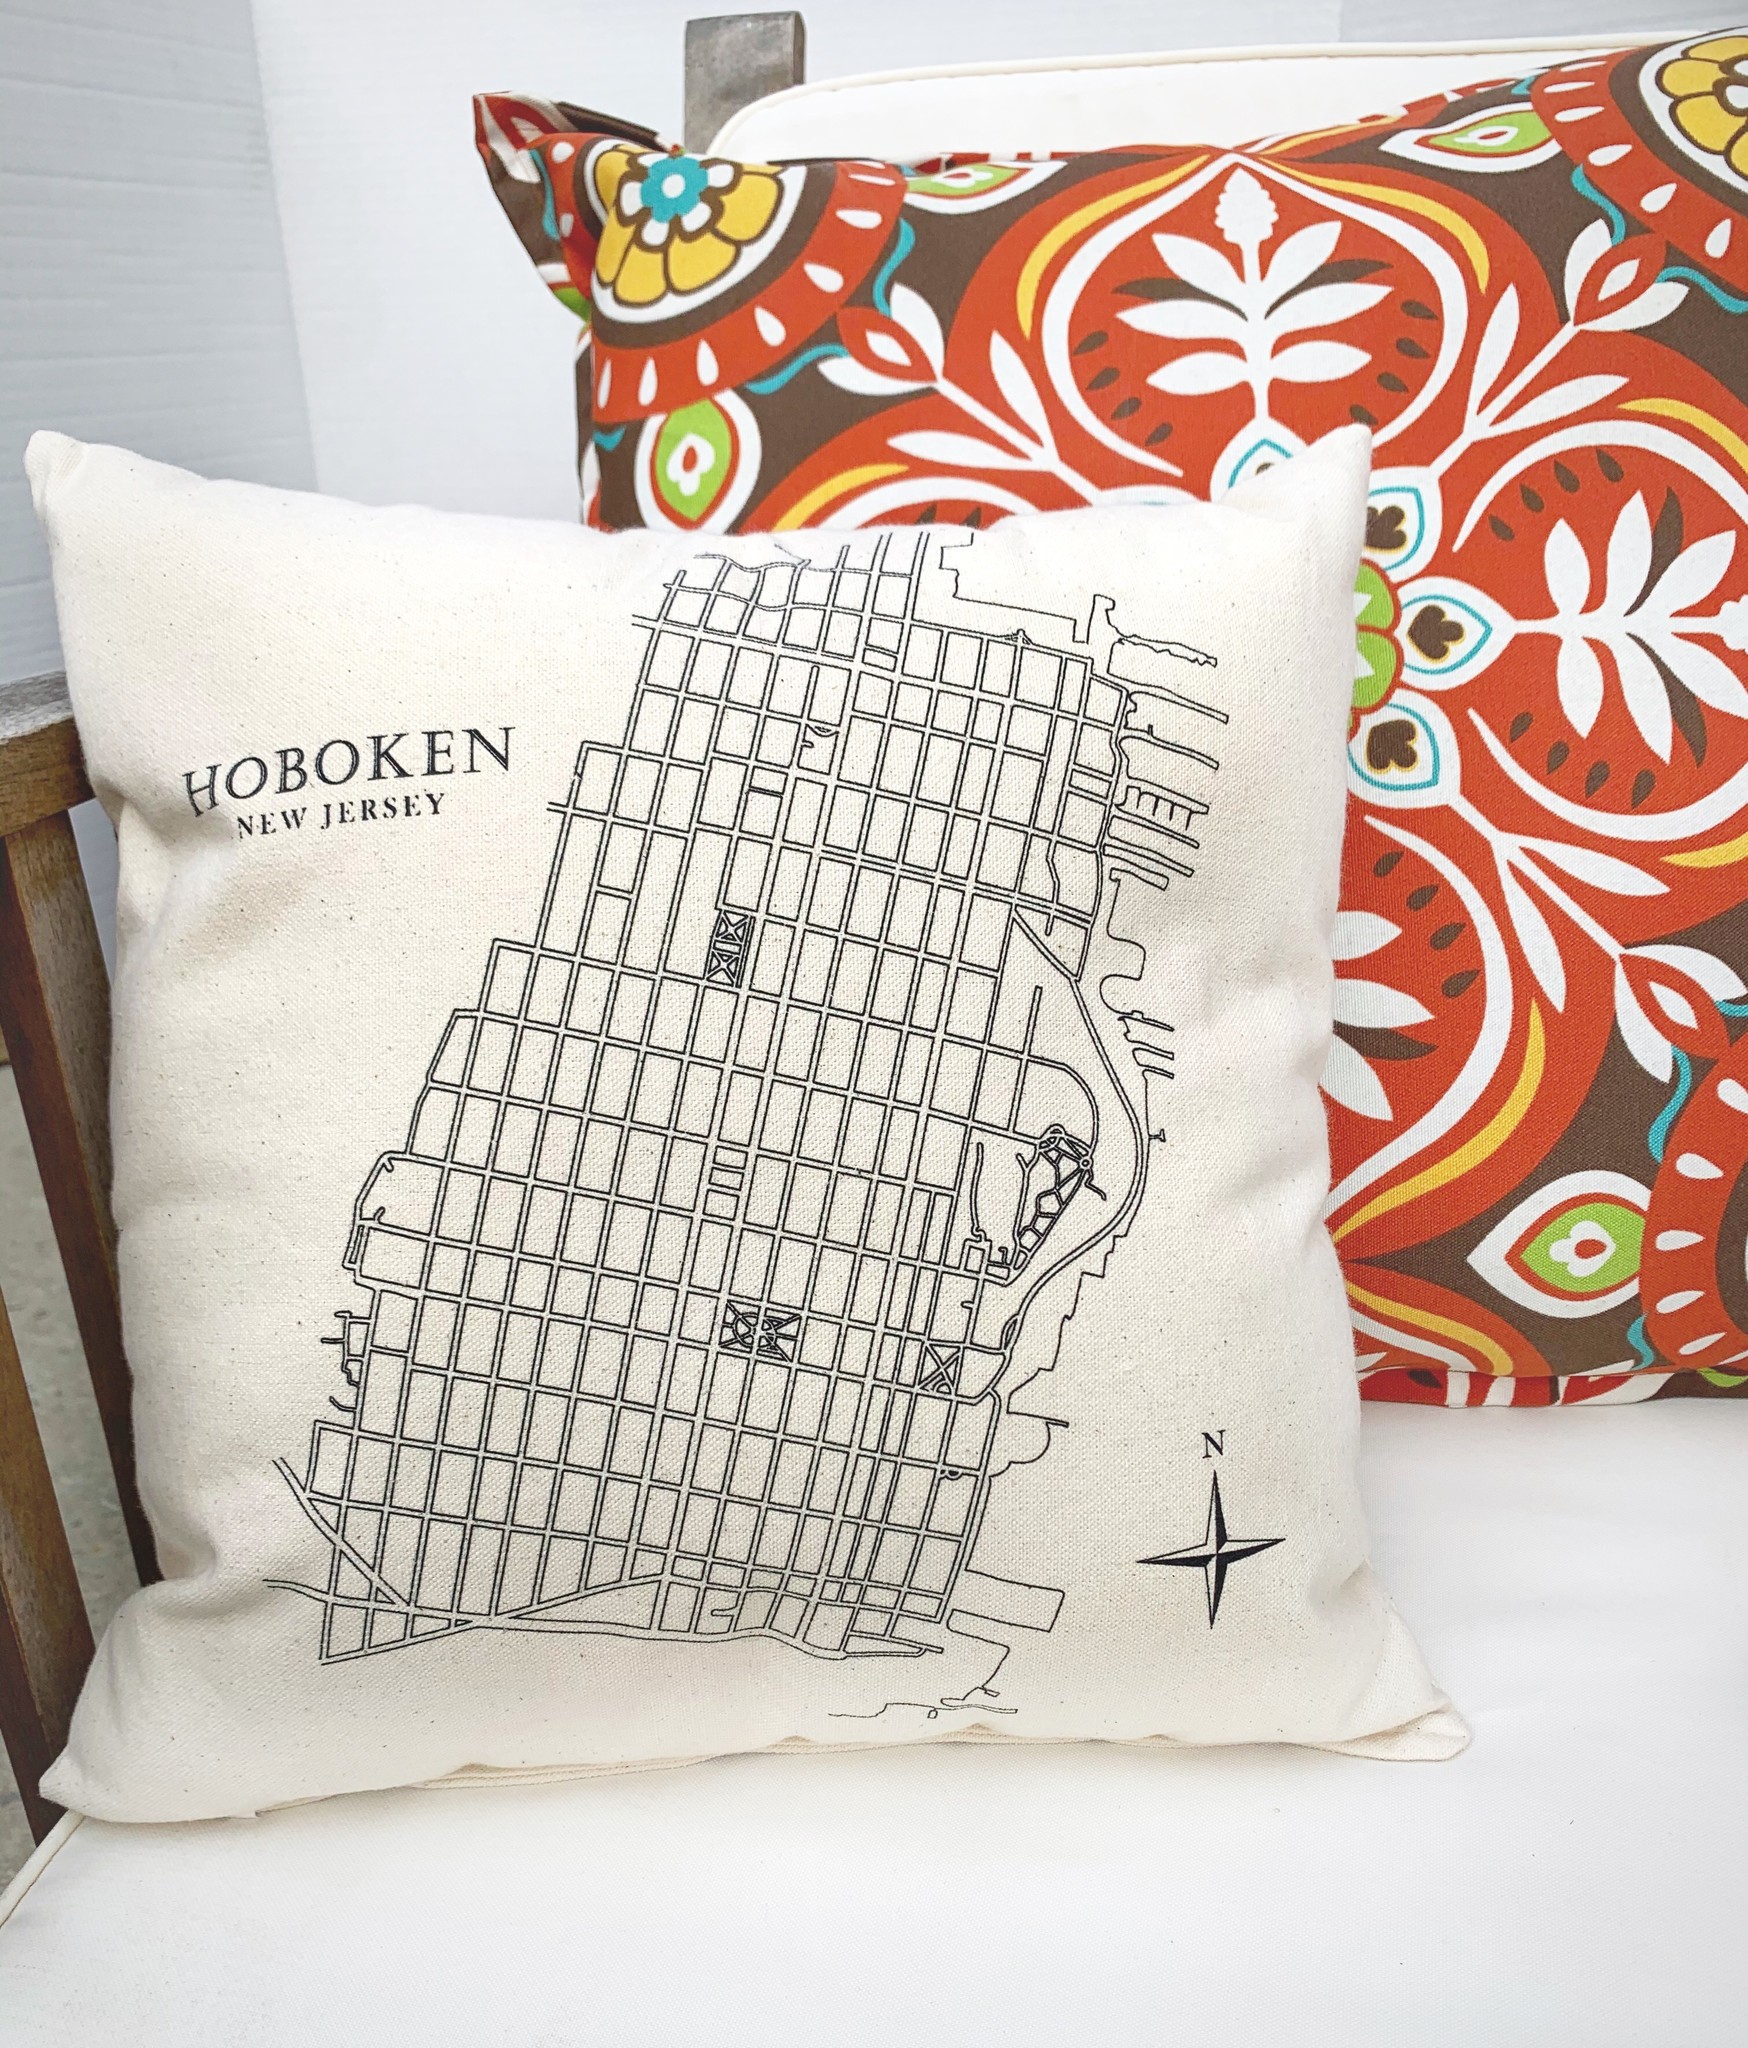 Eric & Christopher Hoboken Map Pillow